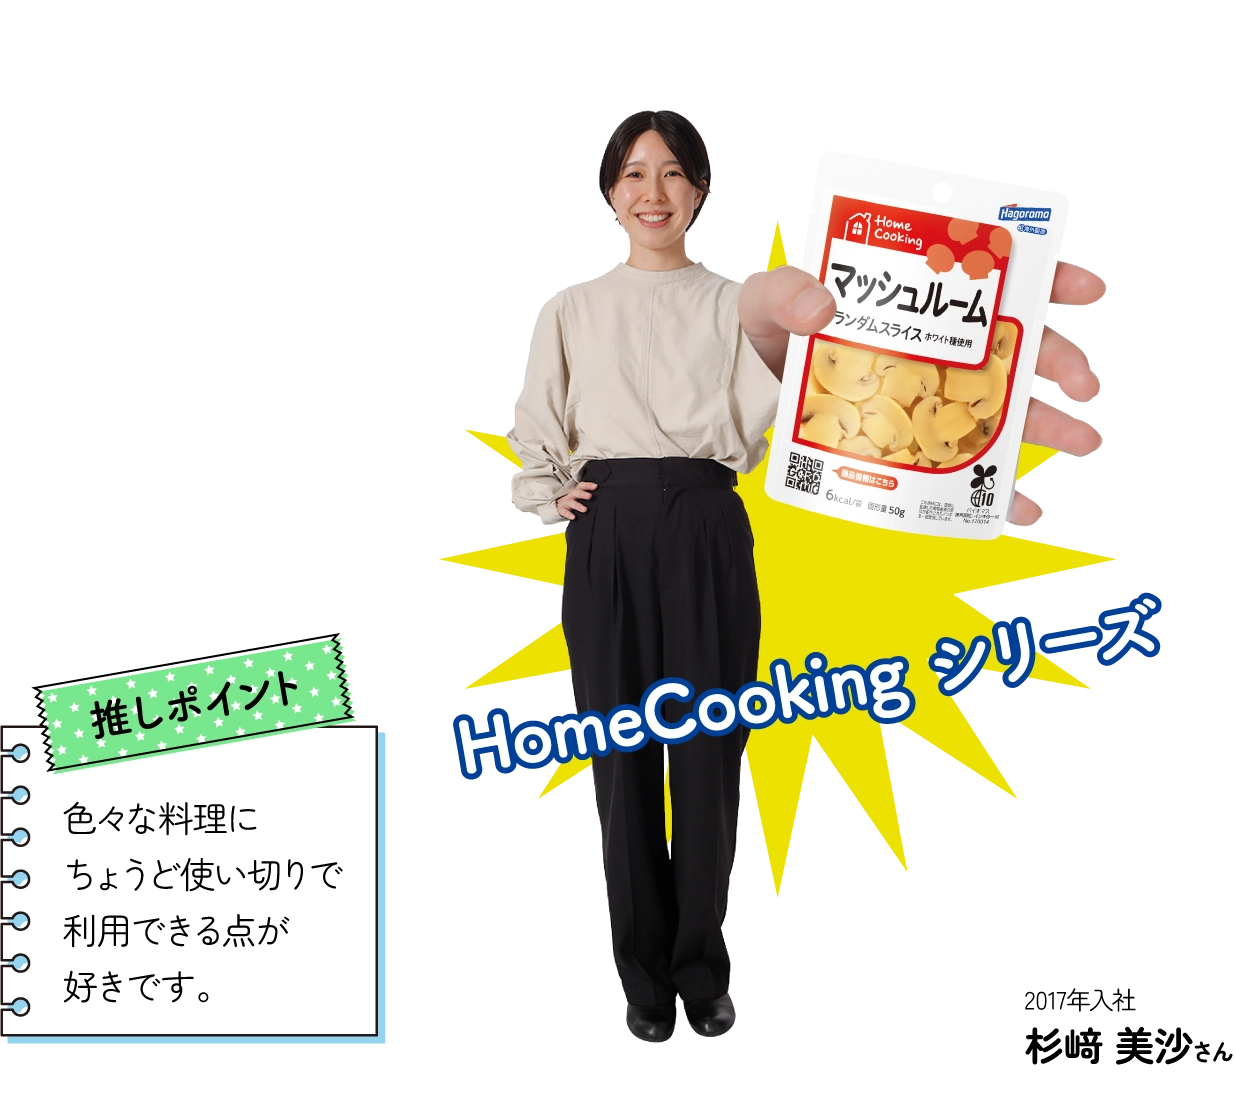 Home Cookingシリーズ 推しポイント：色々な料理にちょうど使い切りで利用できる点が好きです。